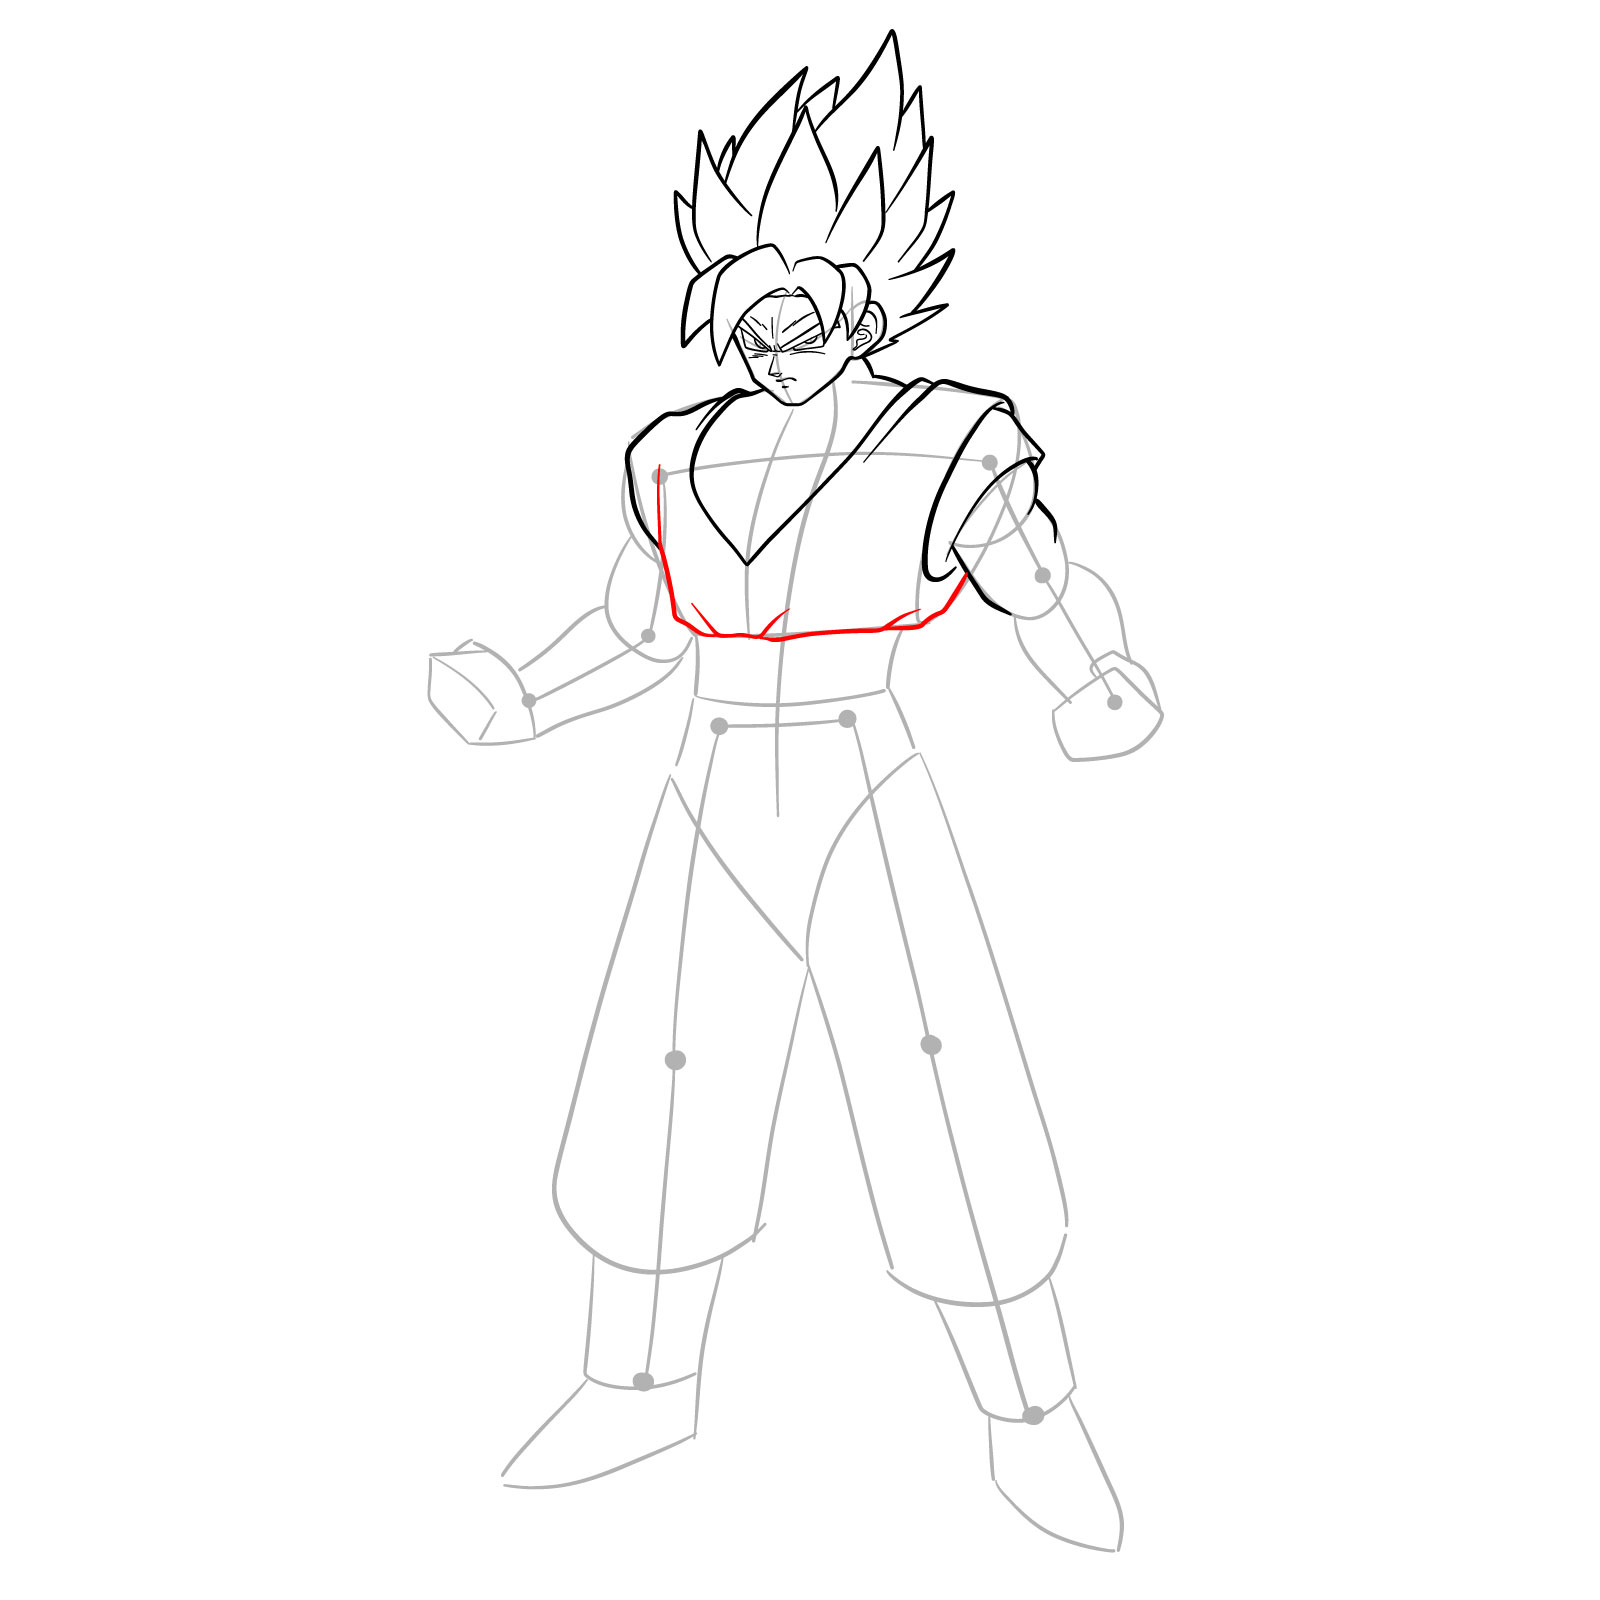 How to draw Goku in Super Saiyan form - step 19